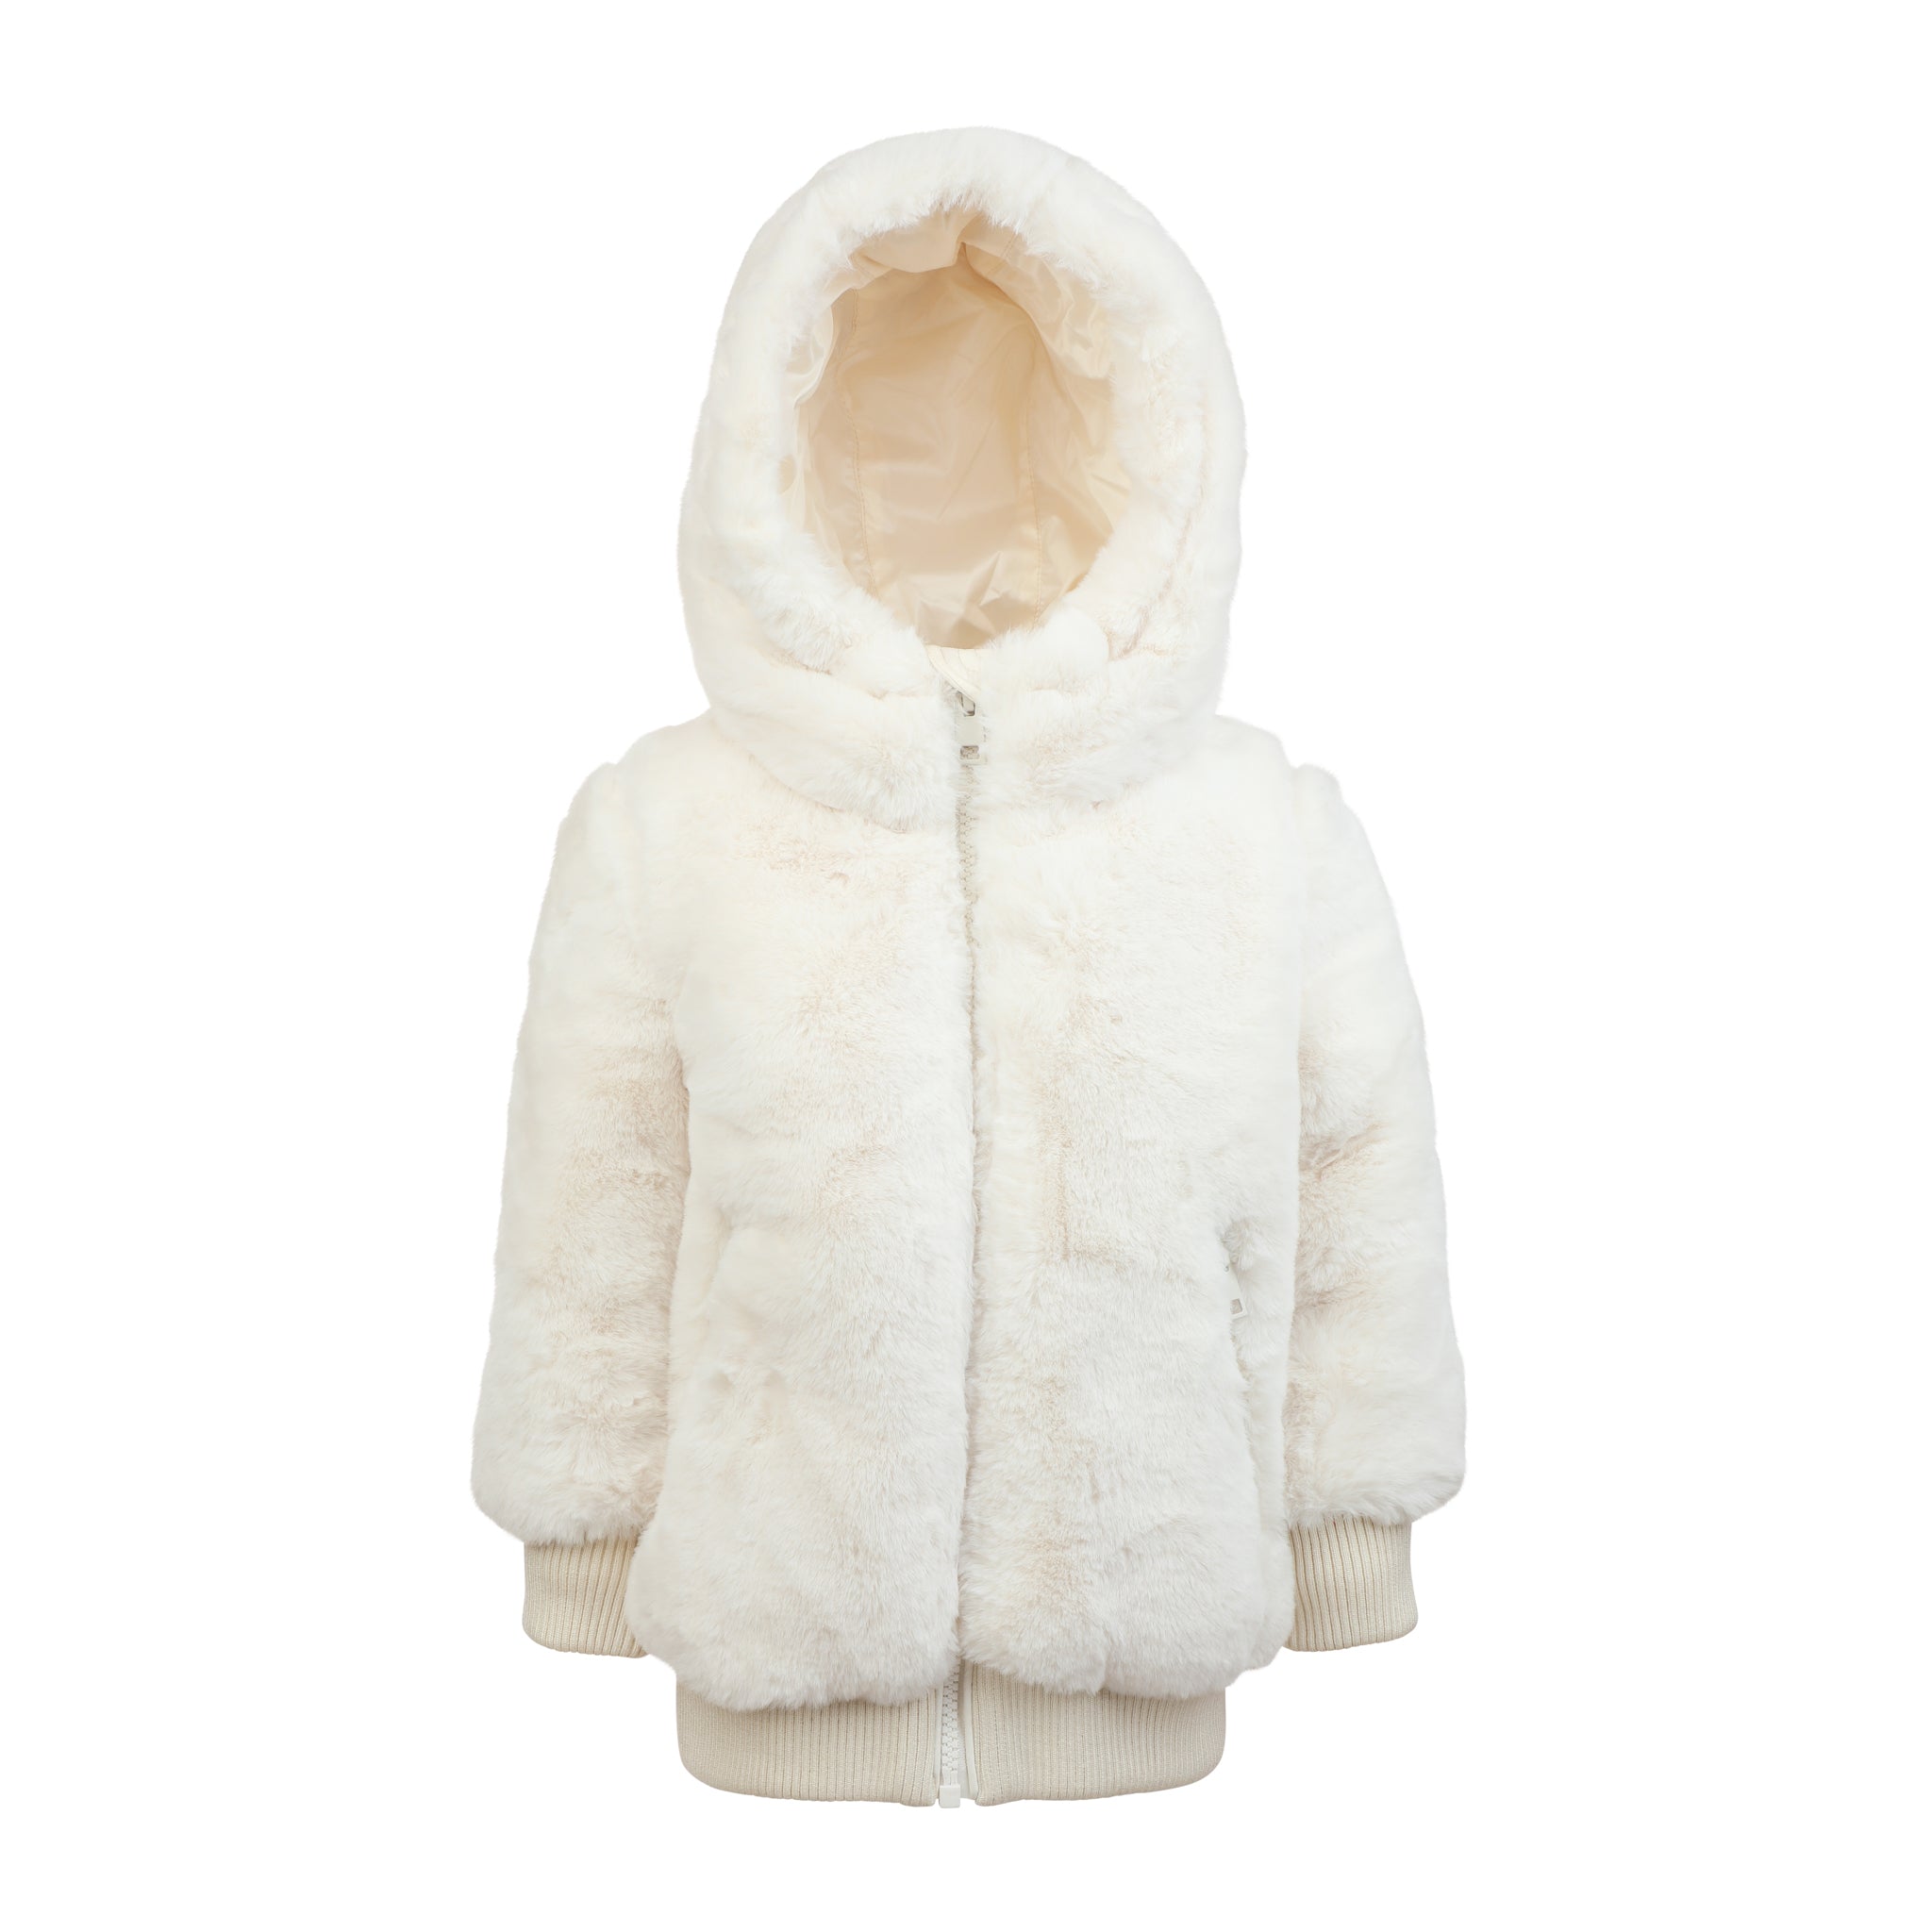 Pramie Fur Jacket - Ivory